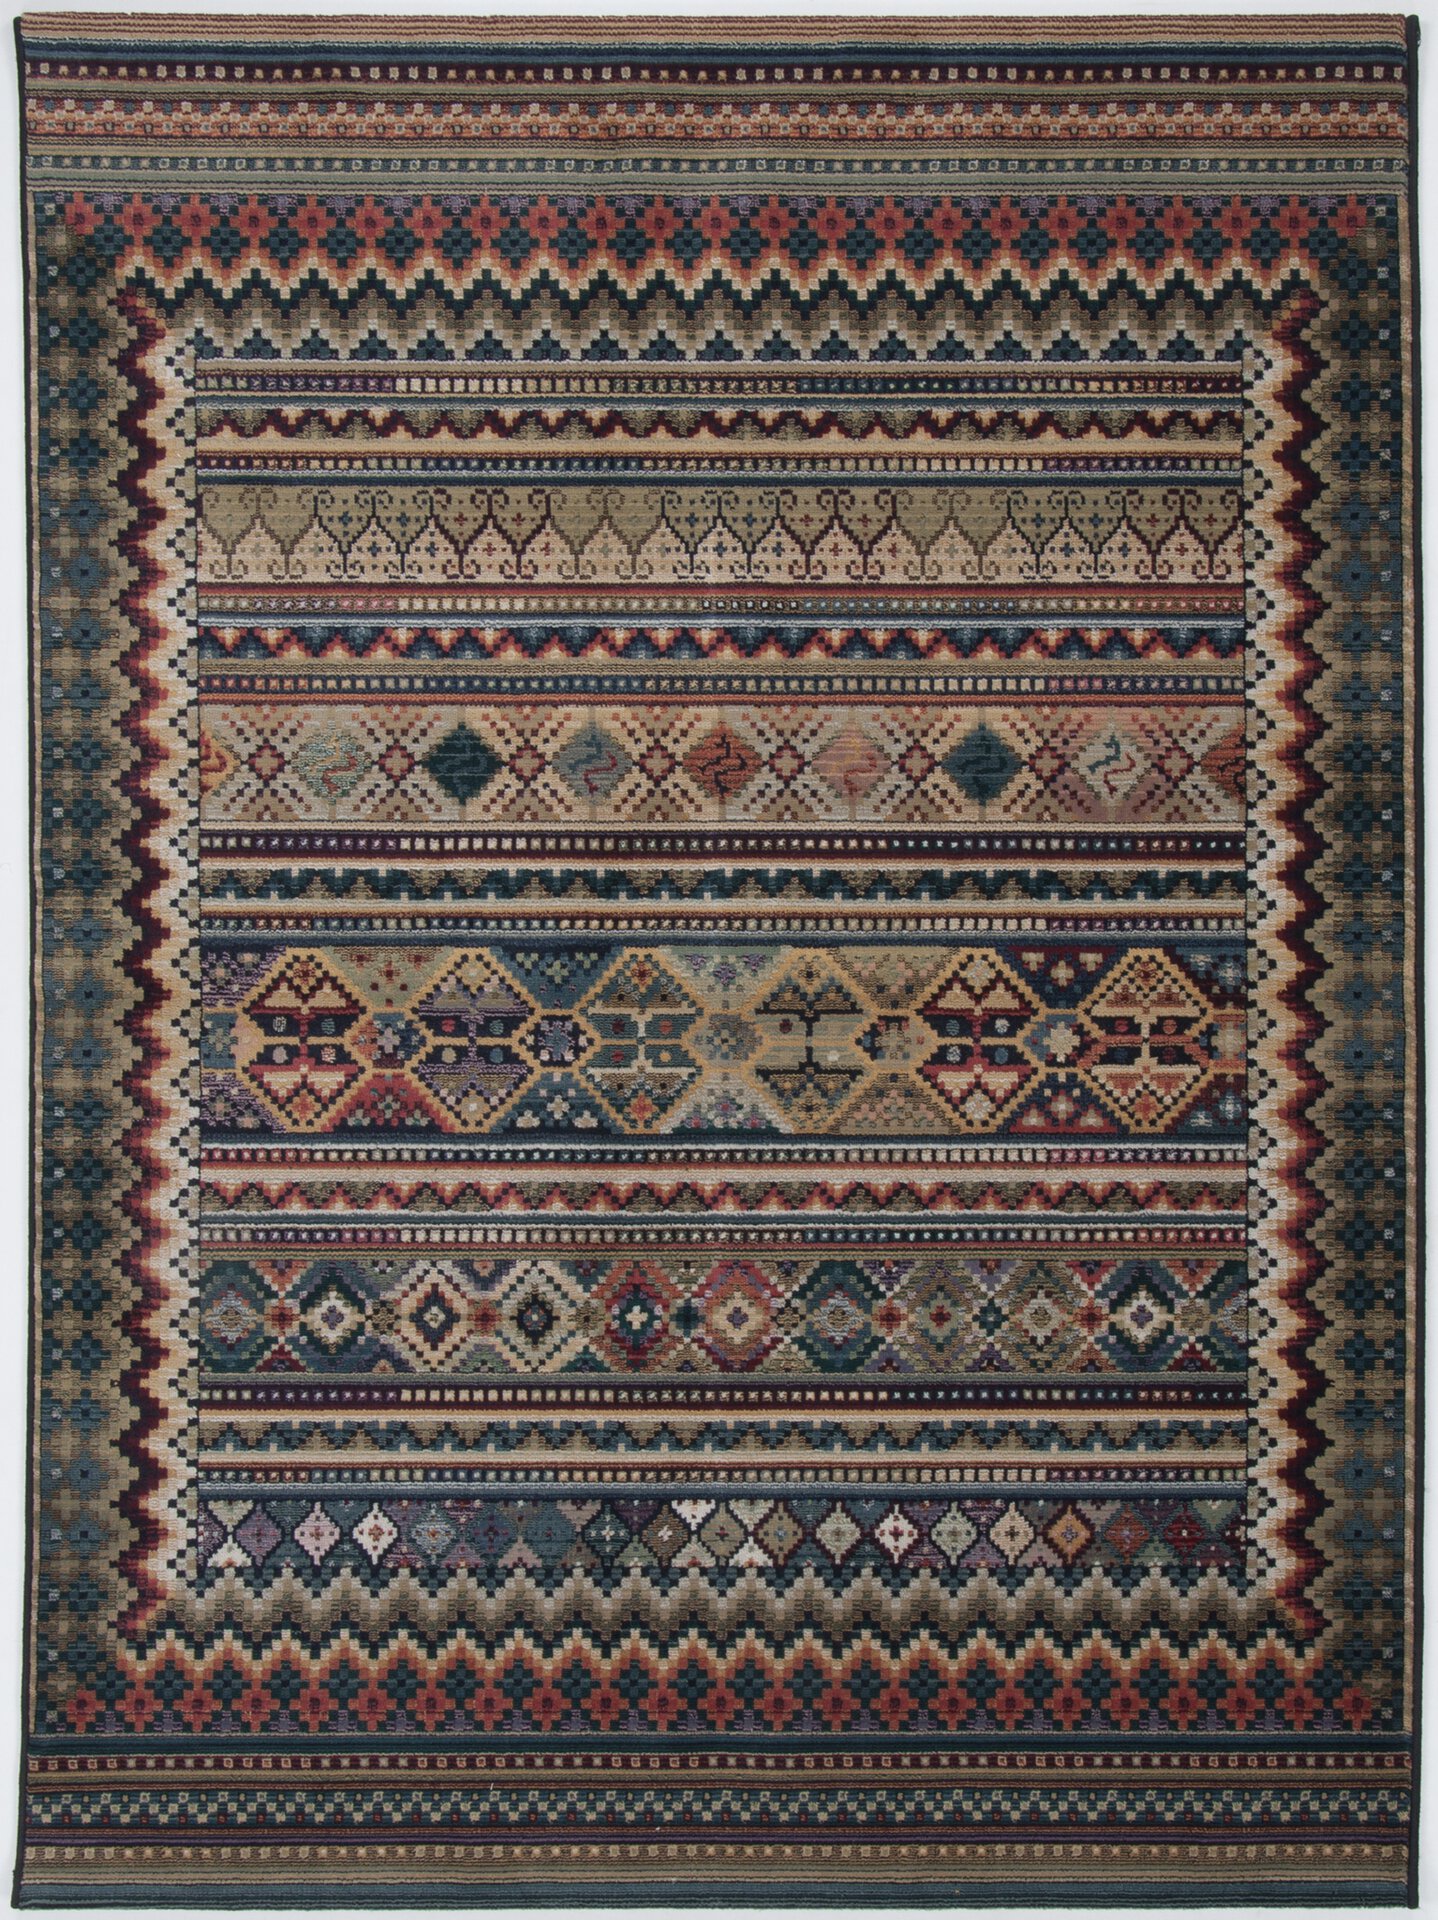 Maschinenwebteppich Gabiro Theko Textil 60 x 90 cm